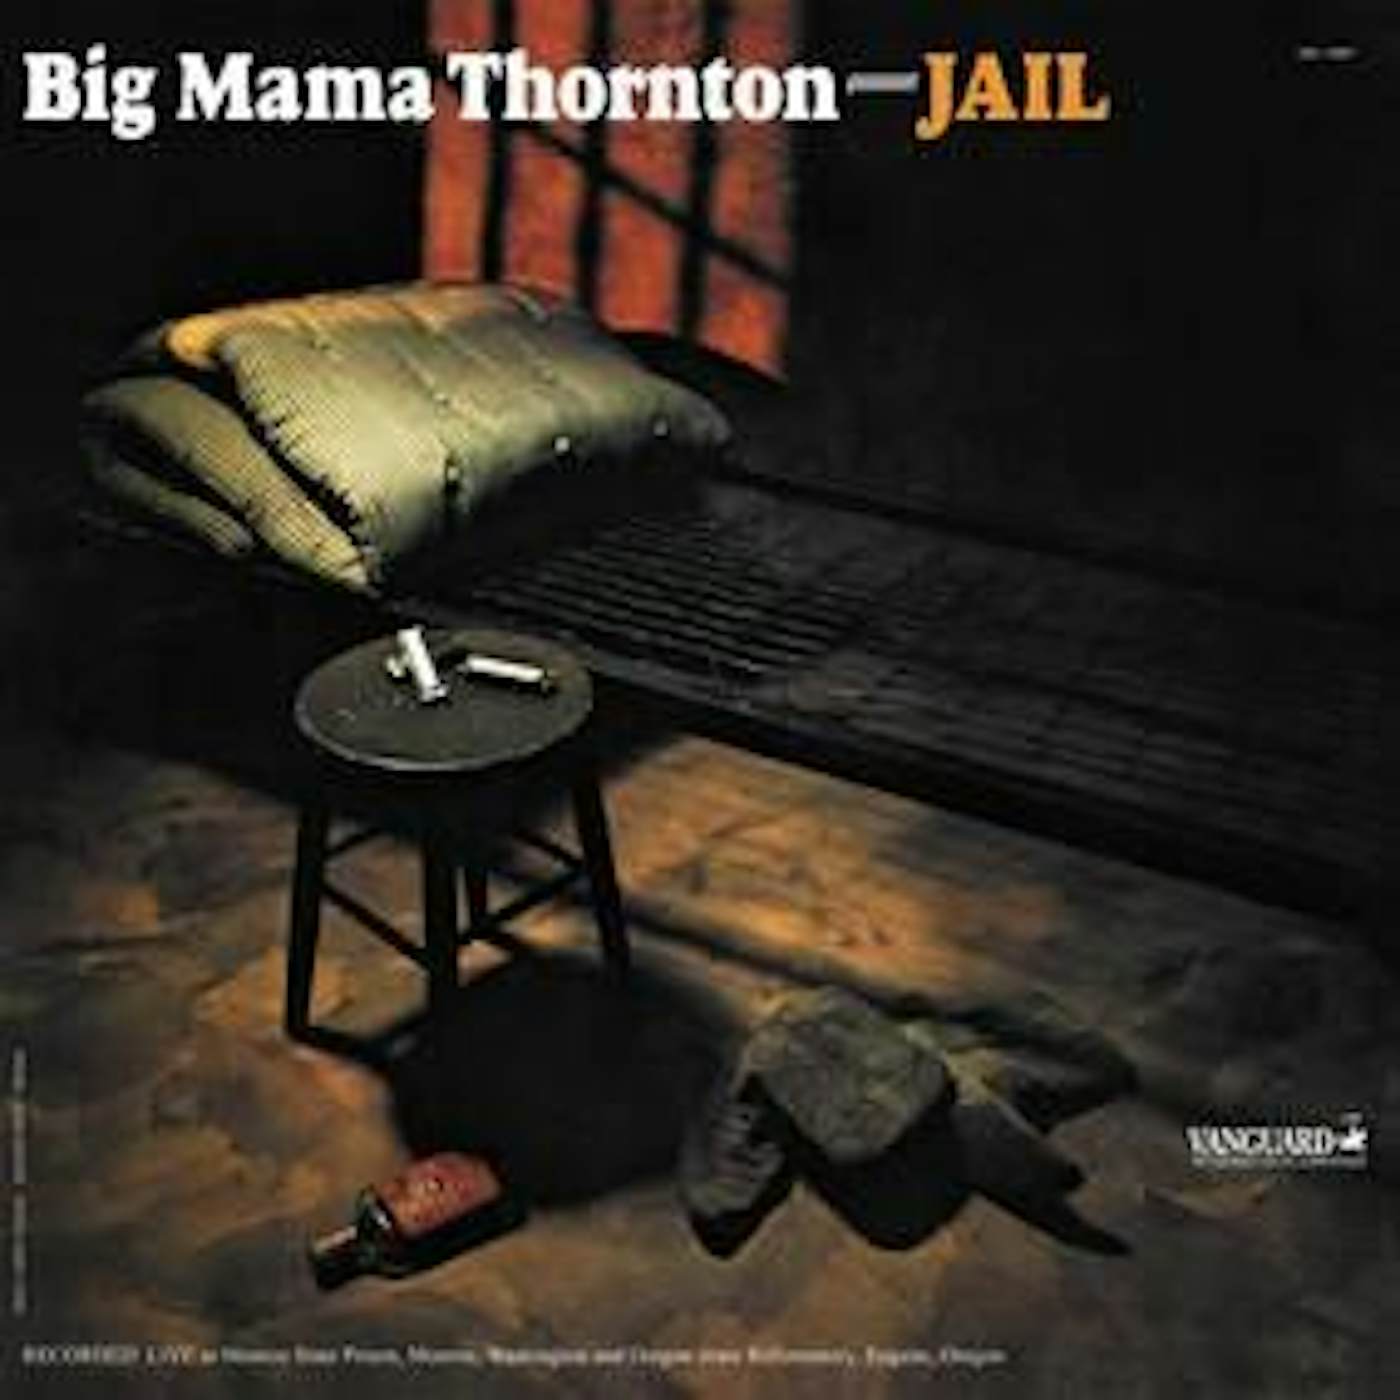 Big Mama Thornton JAIL CD